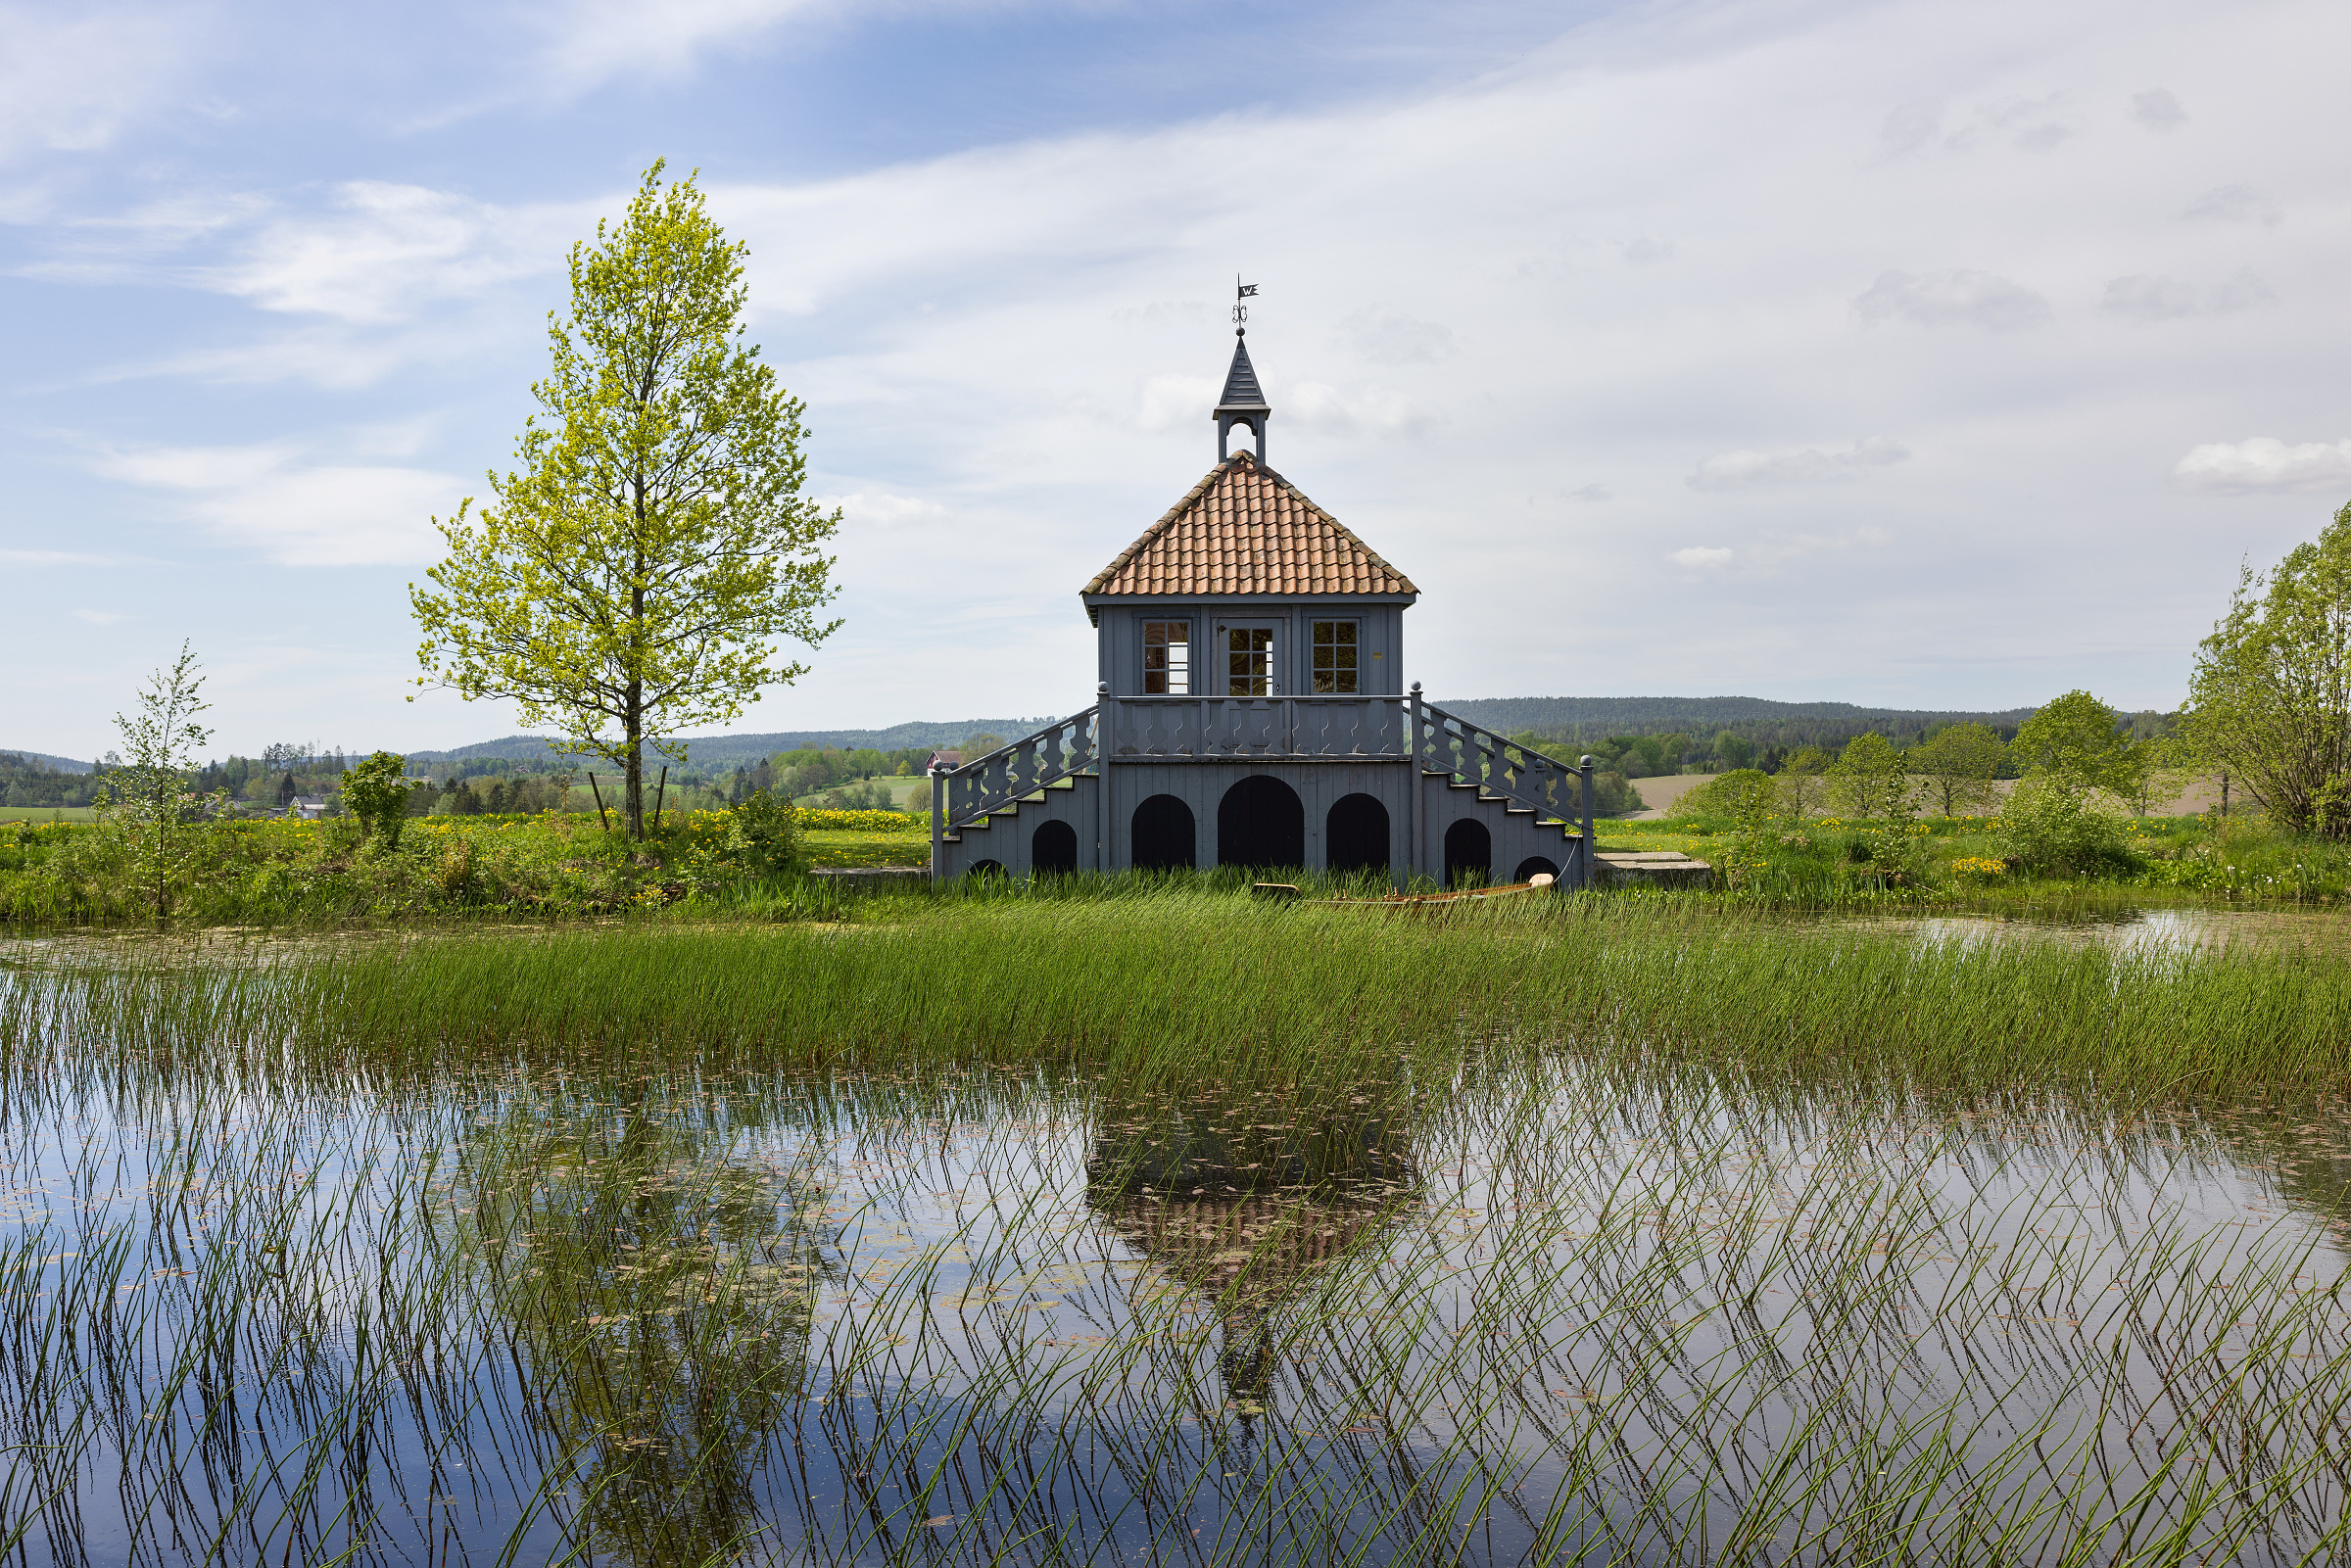 Det historiske lysthuset med dammen med siv på Spydeberg prestegård i Indre Østfold, i sommerhalvåret med grønt gress og blader på treet.